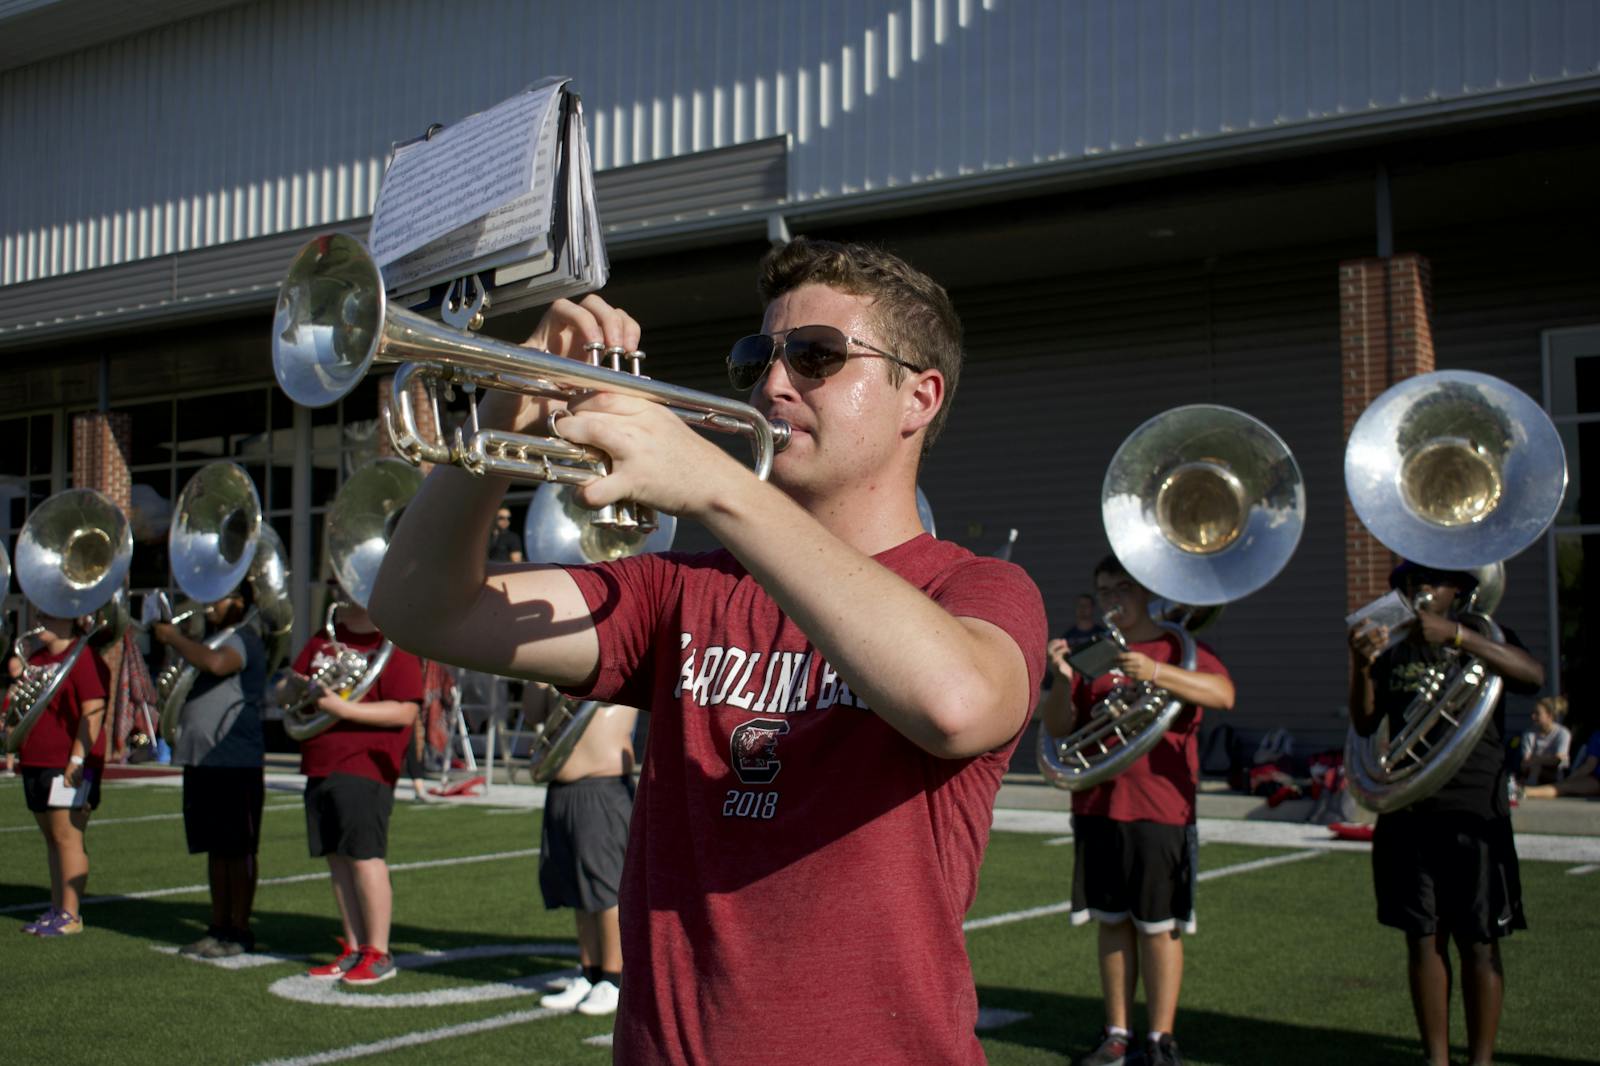 Photo for Best Student Organization: The Carolina Band